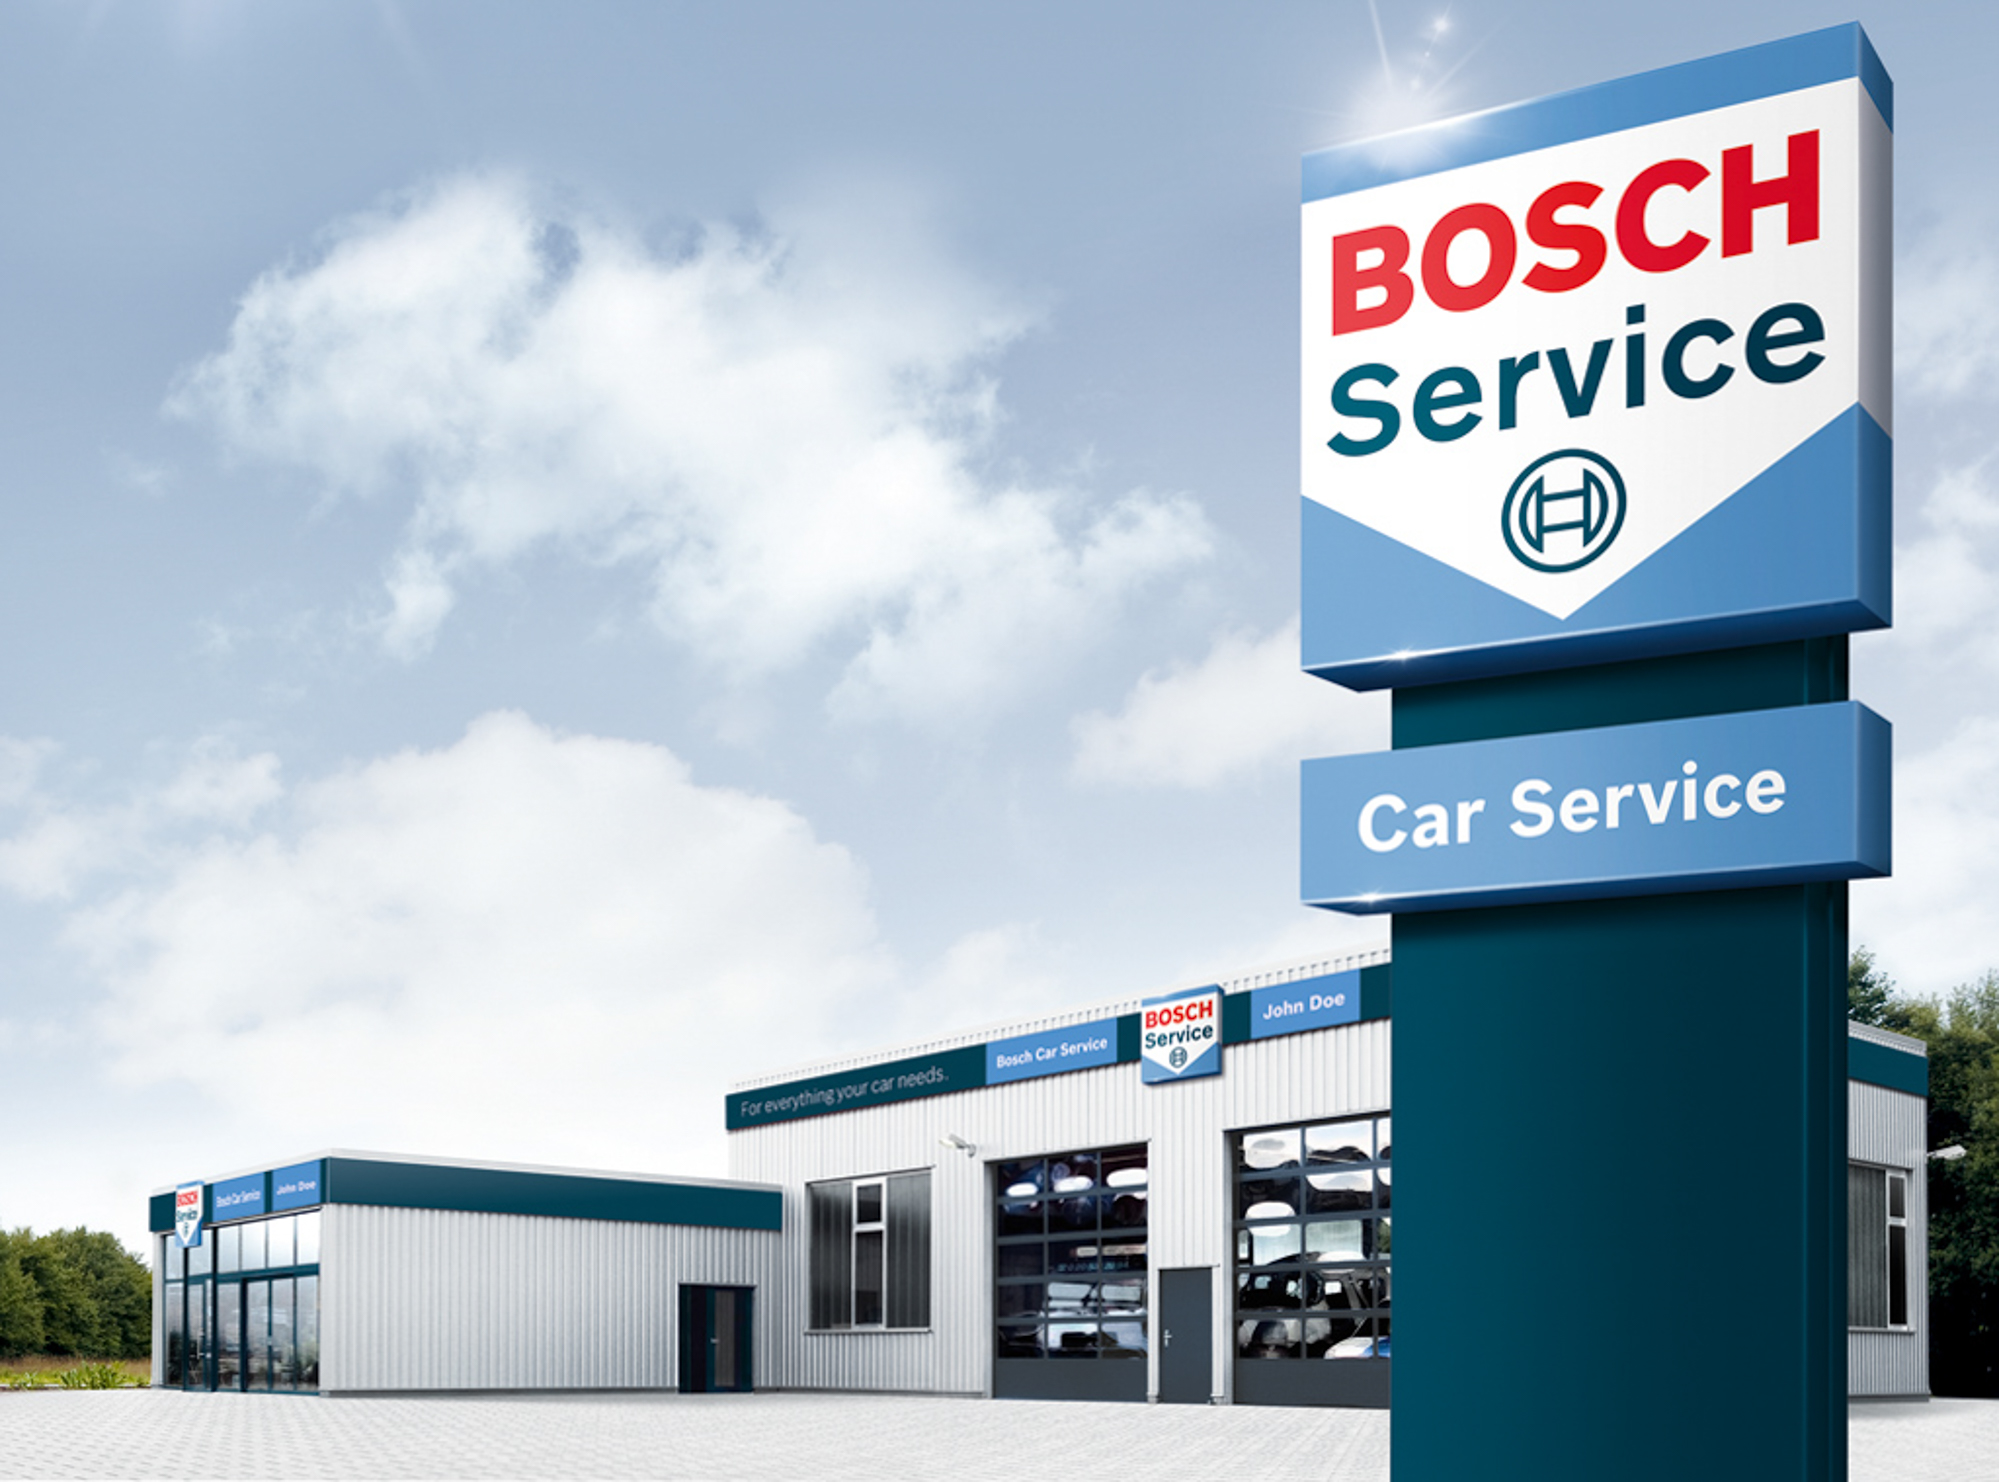 BCS （Bosch Car Service） 博世汽車專業維修奠基於 Bosch 博世汽車其強大的科技能量與專業服務品質之上所成立的專業小客車修服務。